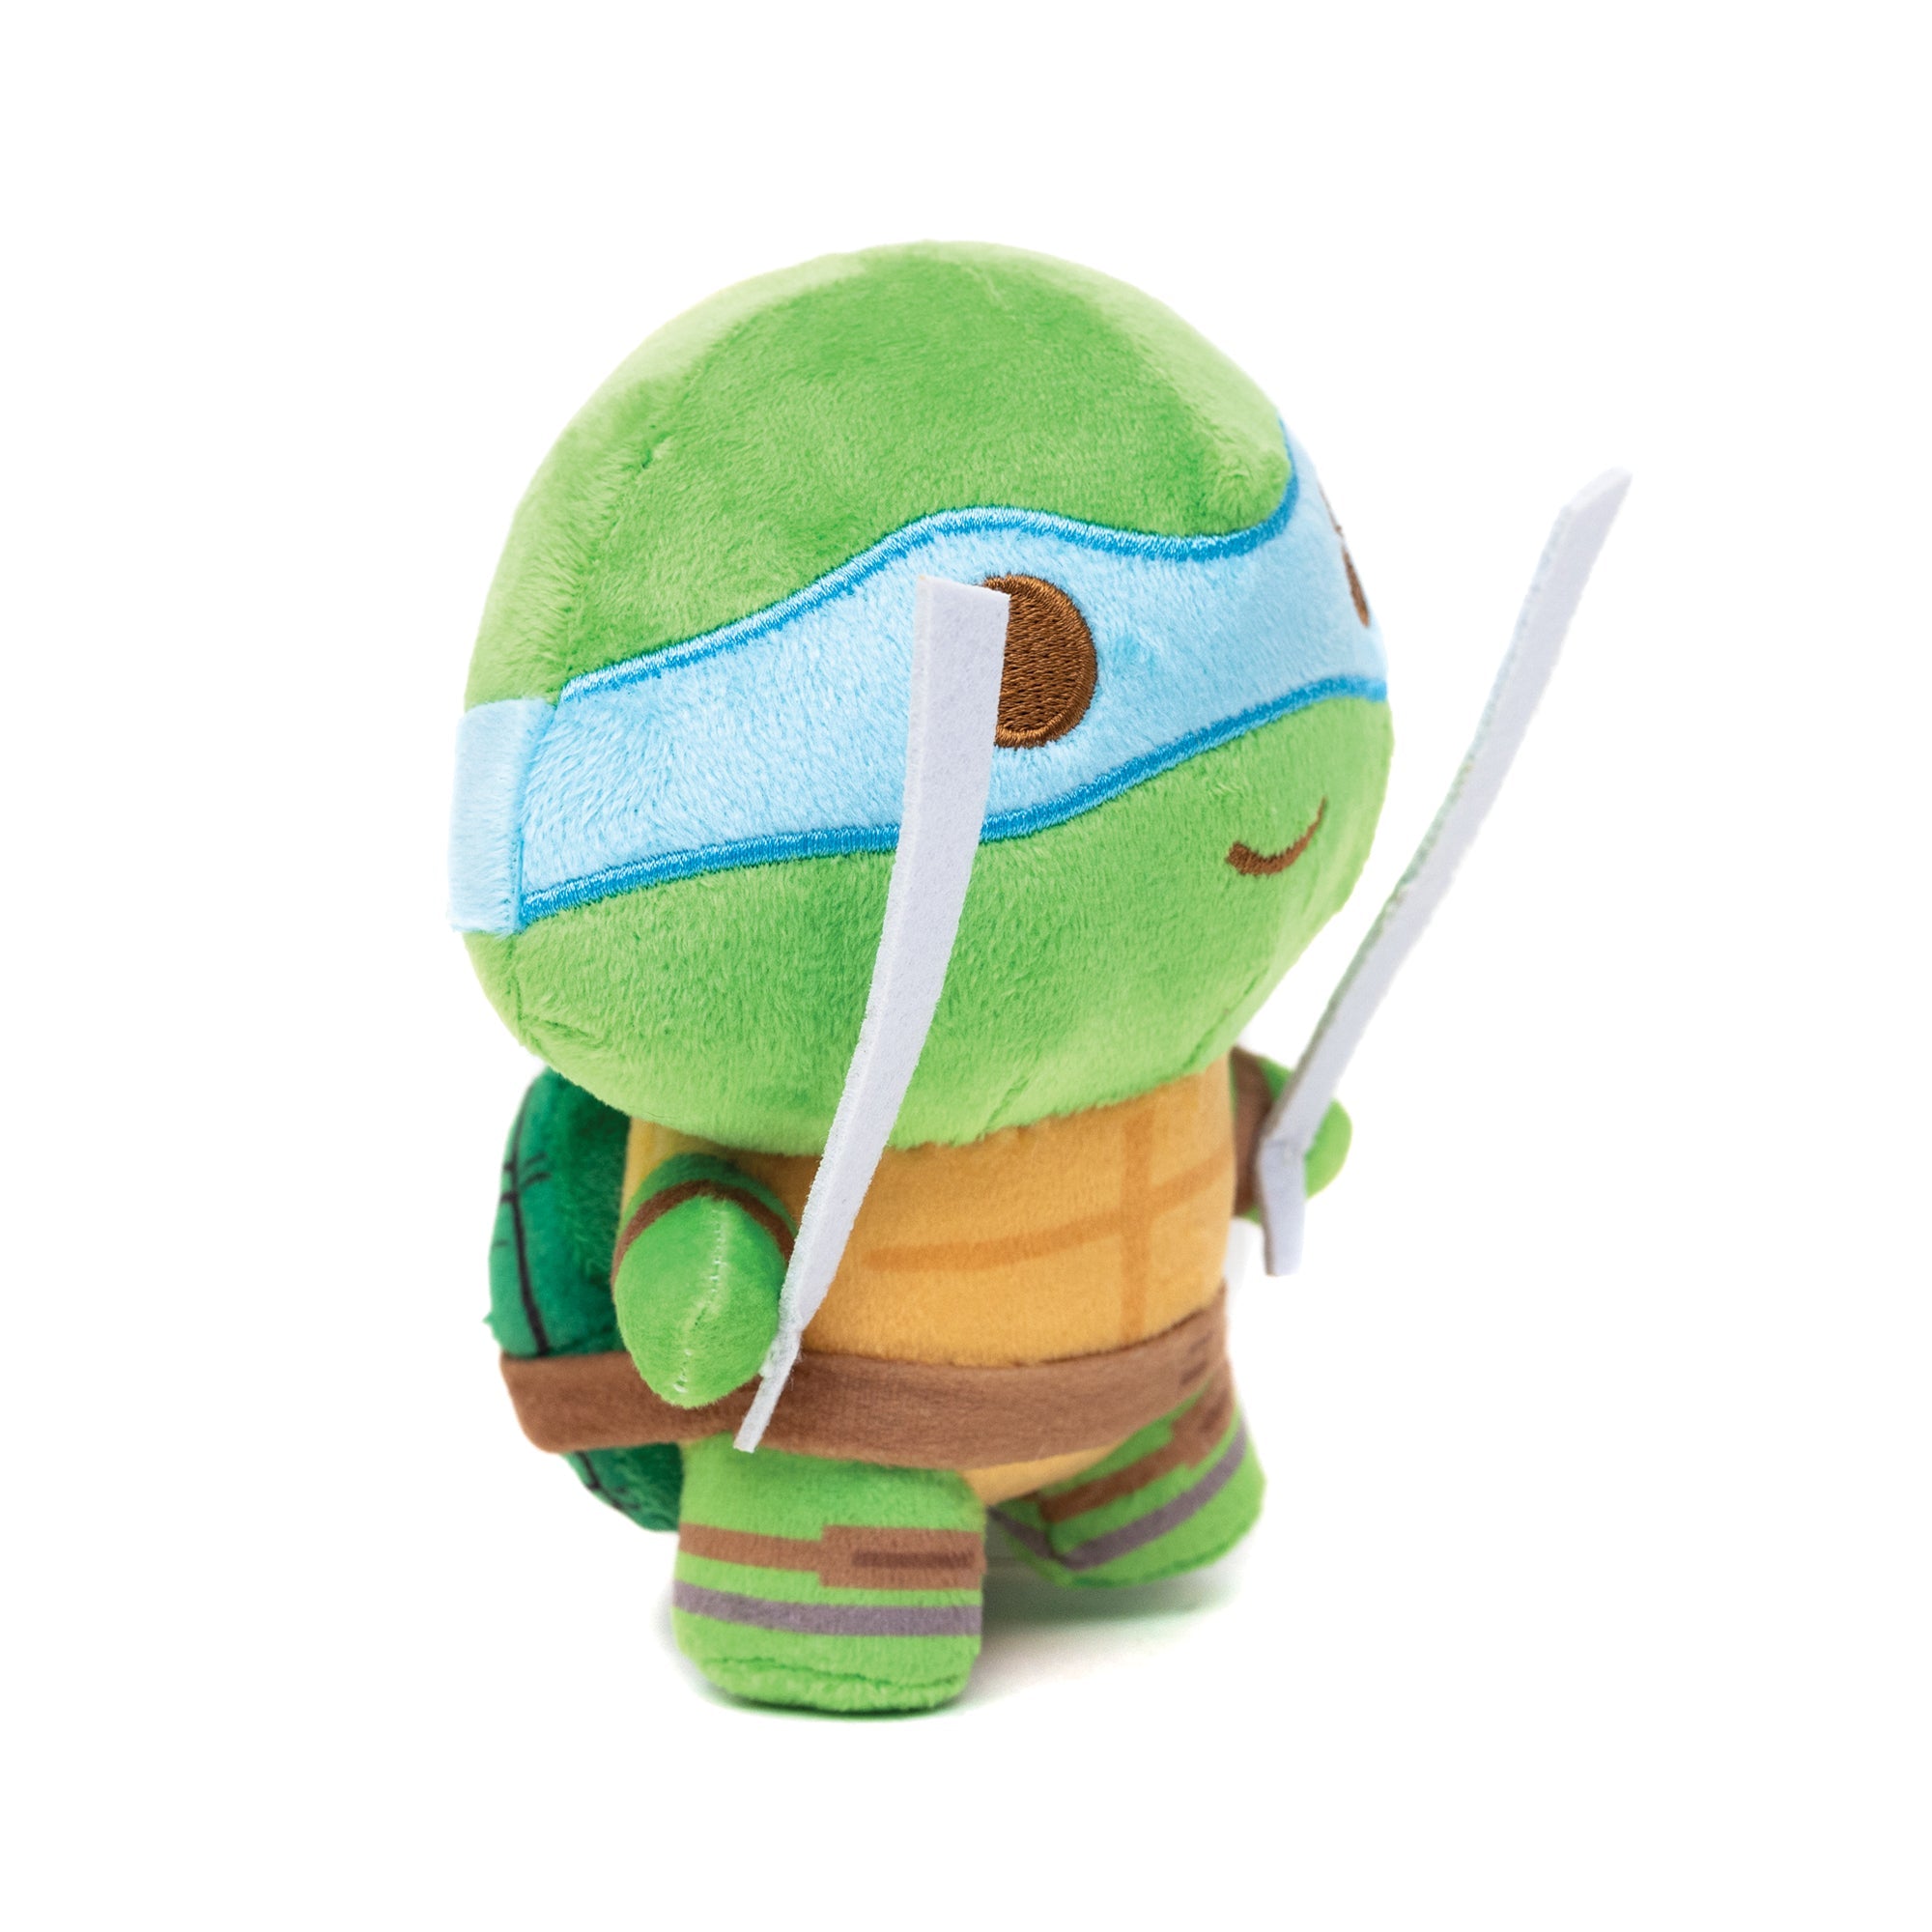 Teenage Mutant Ninja Turtles Michelangelo 9-Inch Plush